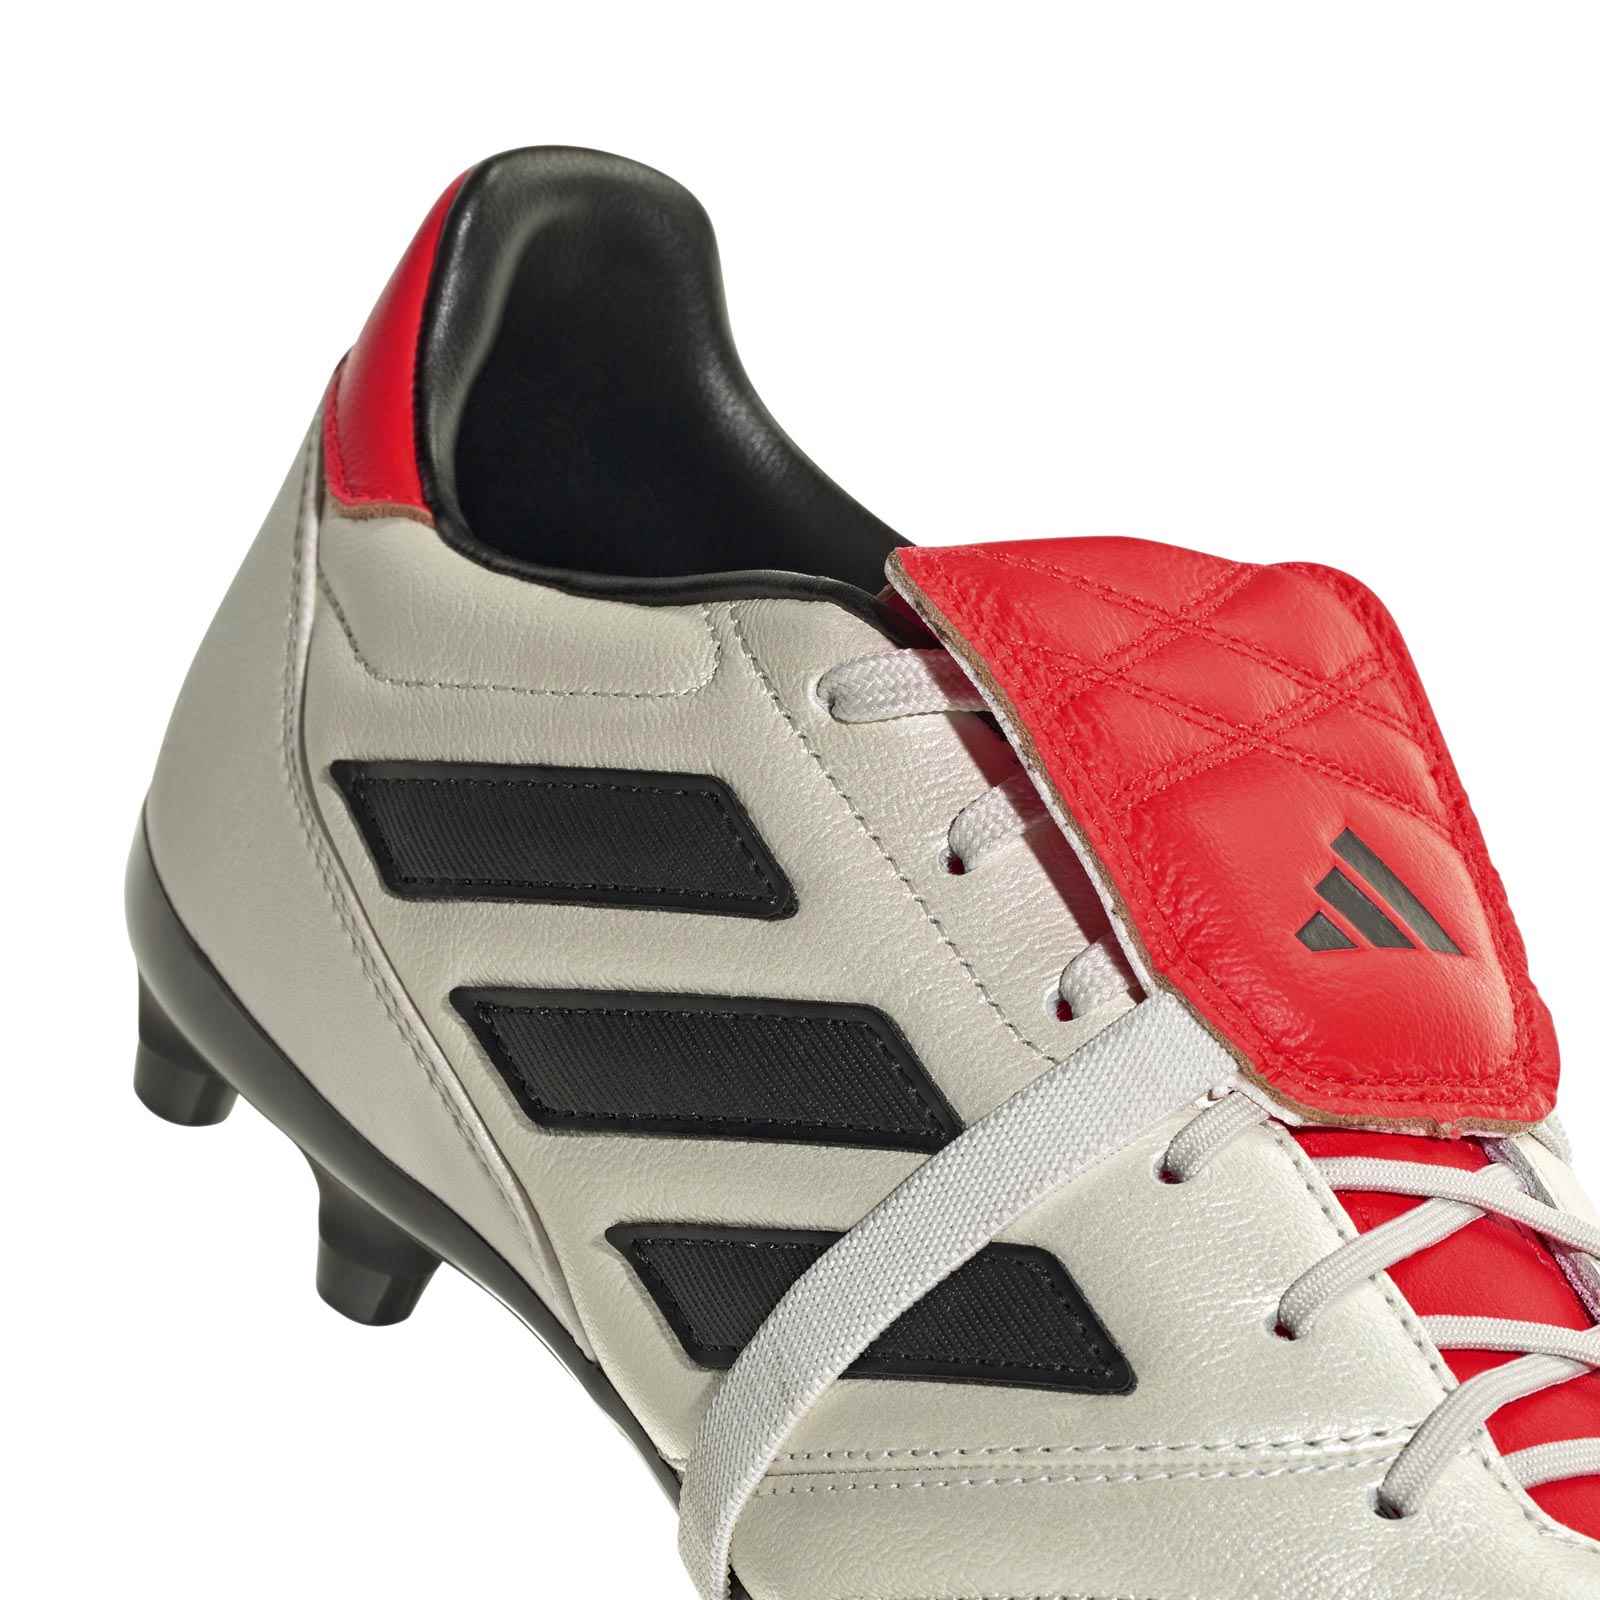 adidas Copa Gloro Firm-Ground Football Boots